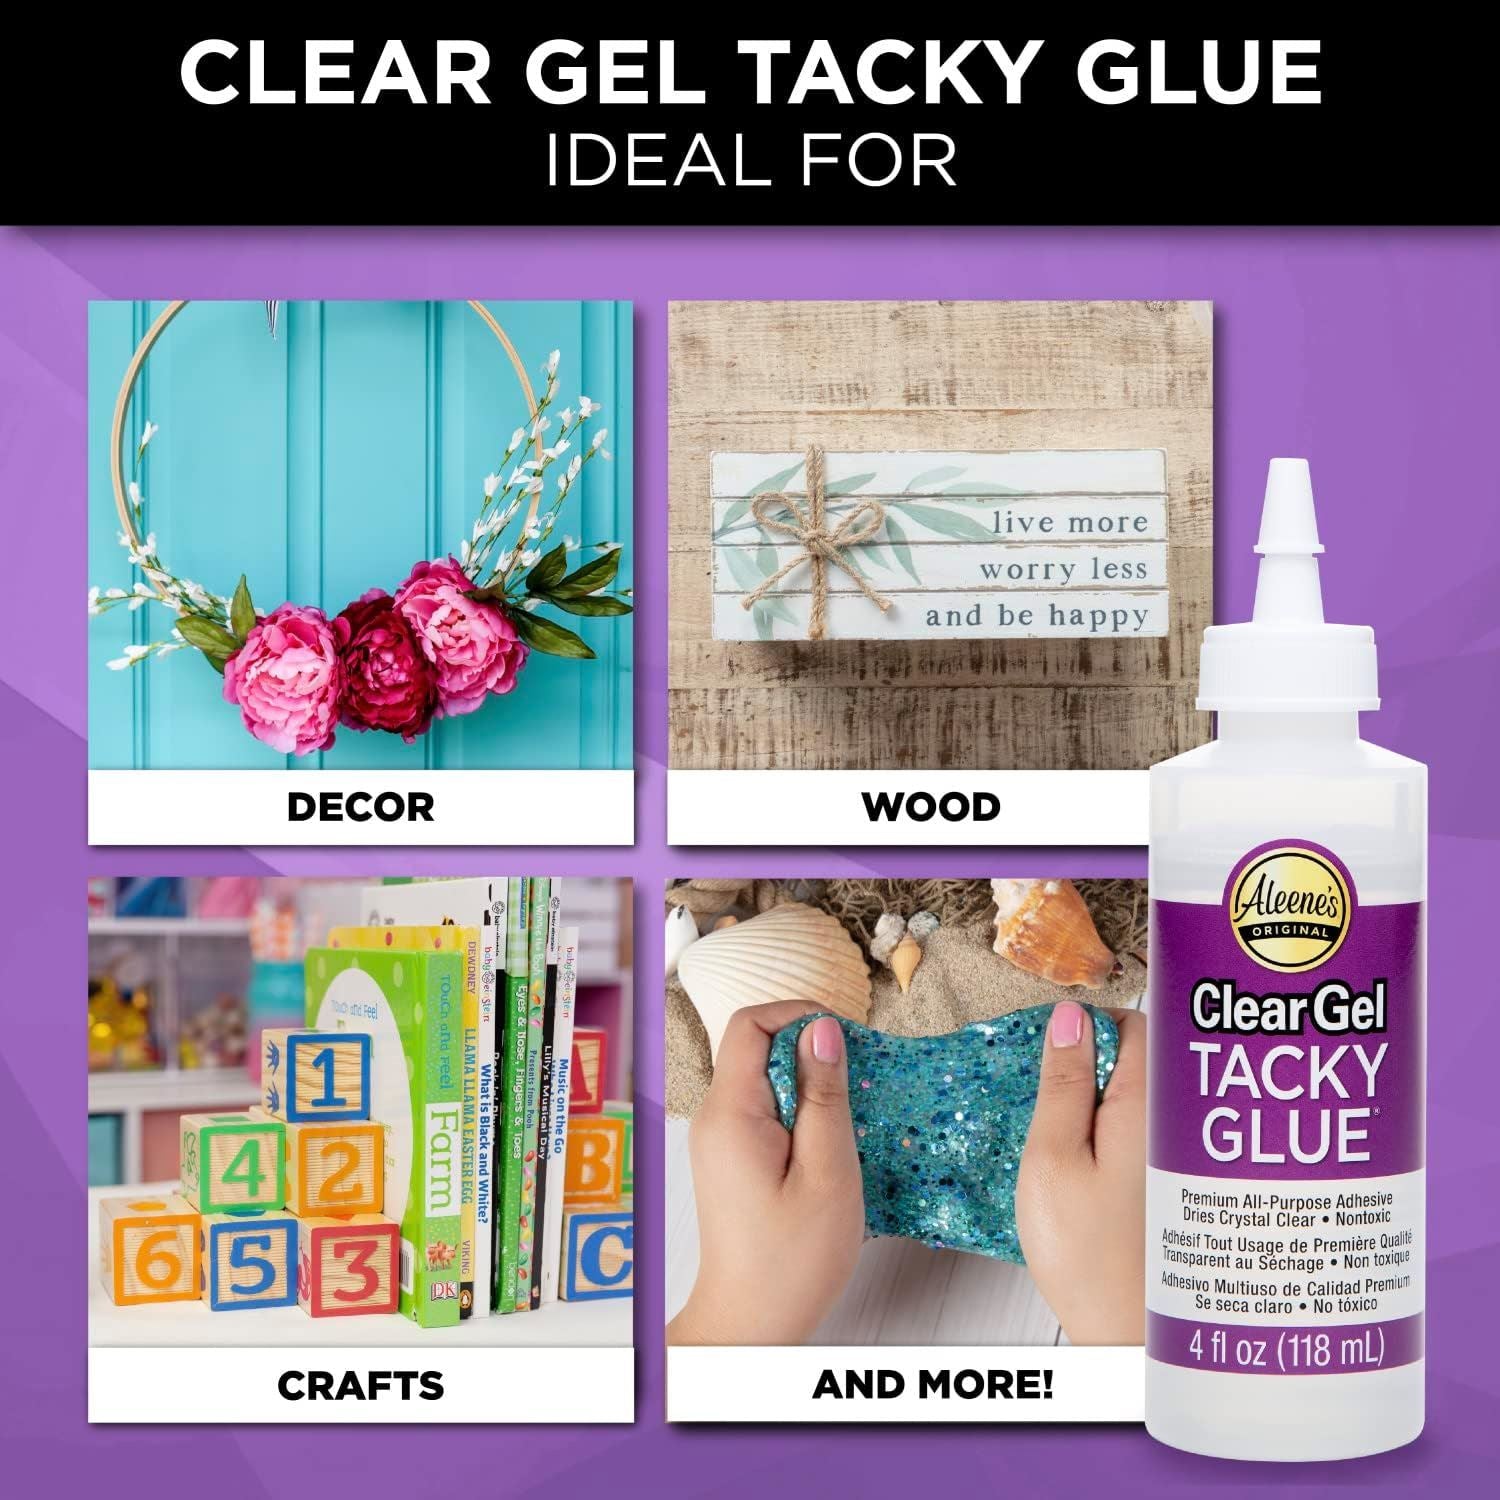 Aleene's All Purpose Tacky Glue, 8-Ounce